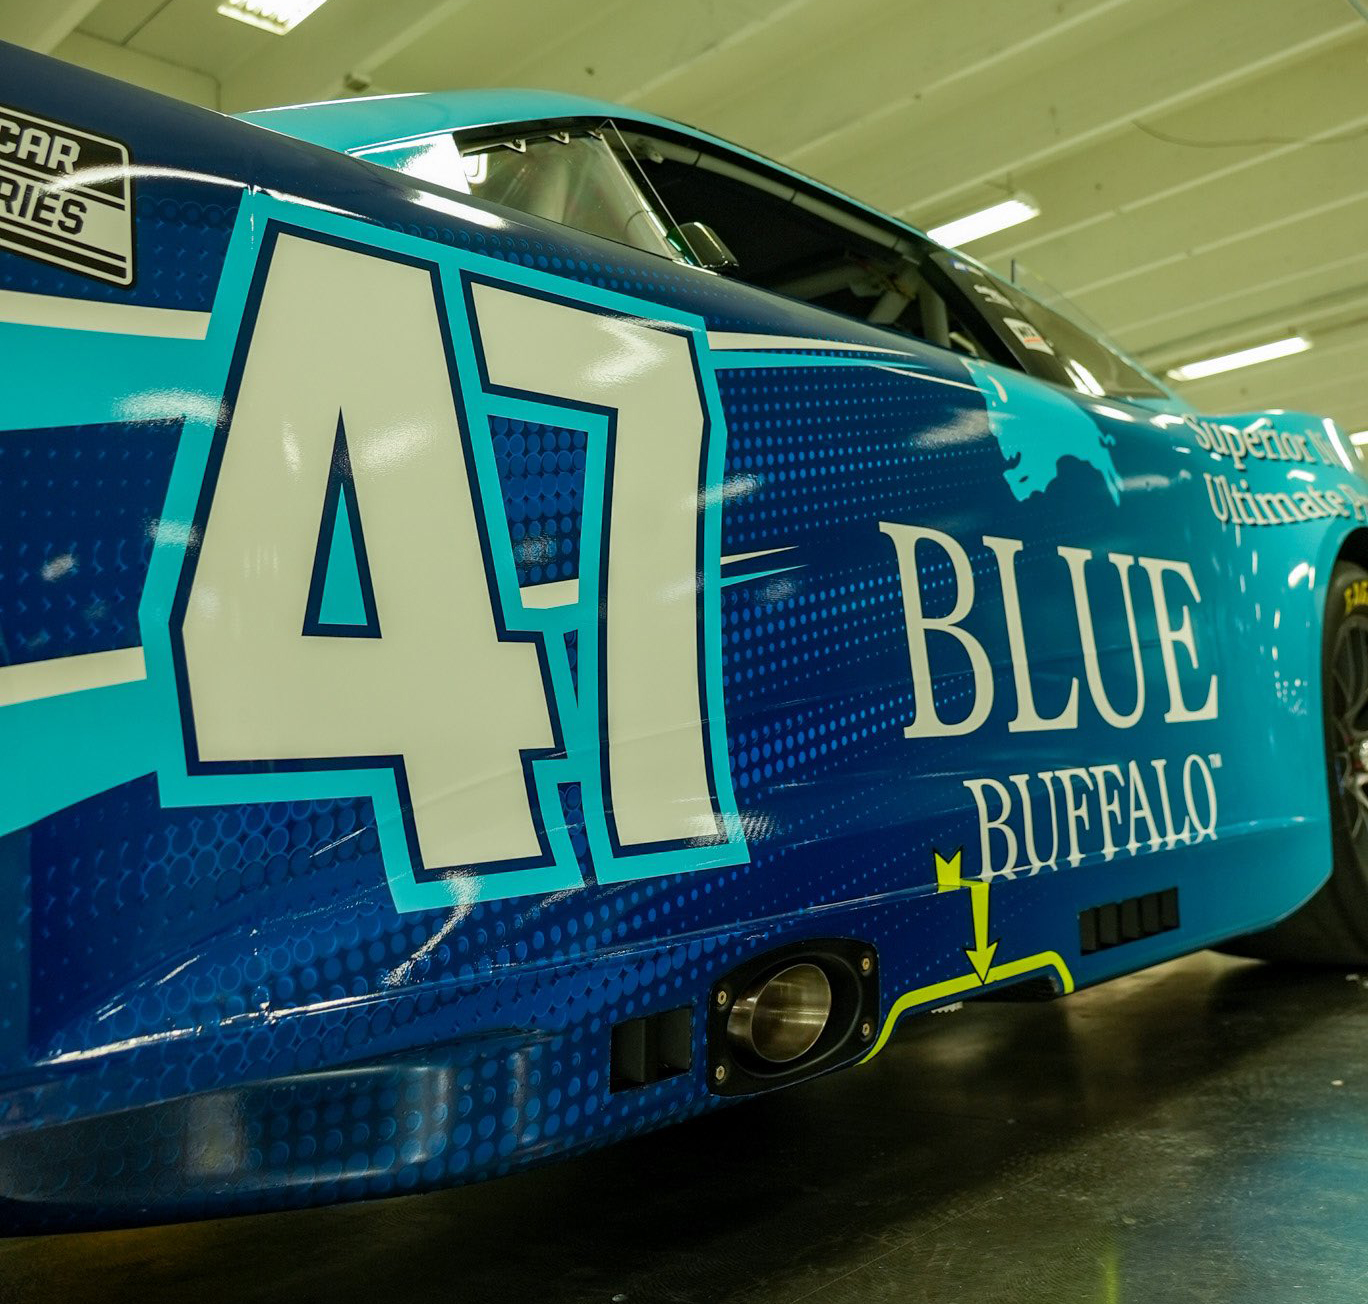 Ricky Stenhouse Jr. Boost / Blue Buffalo paint scheme 2024 JTG Daugherty Racing NASCAR Cup Series